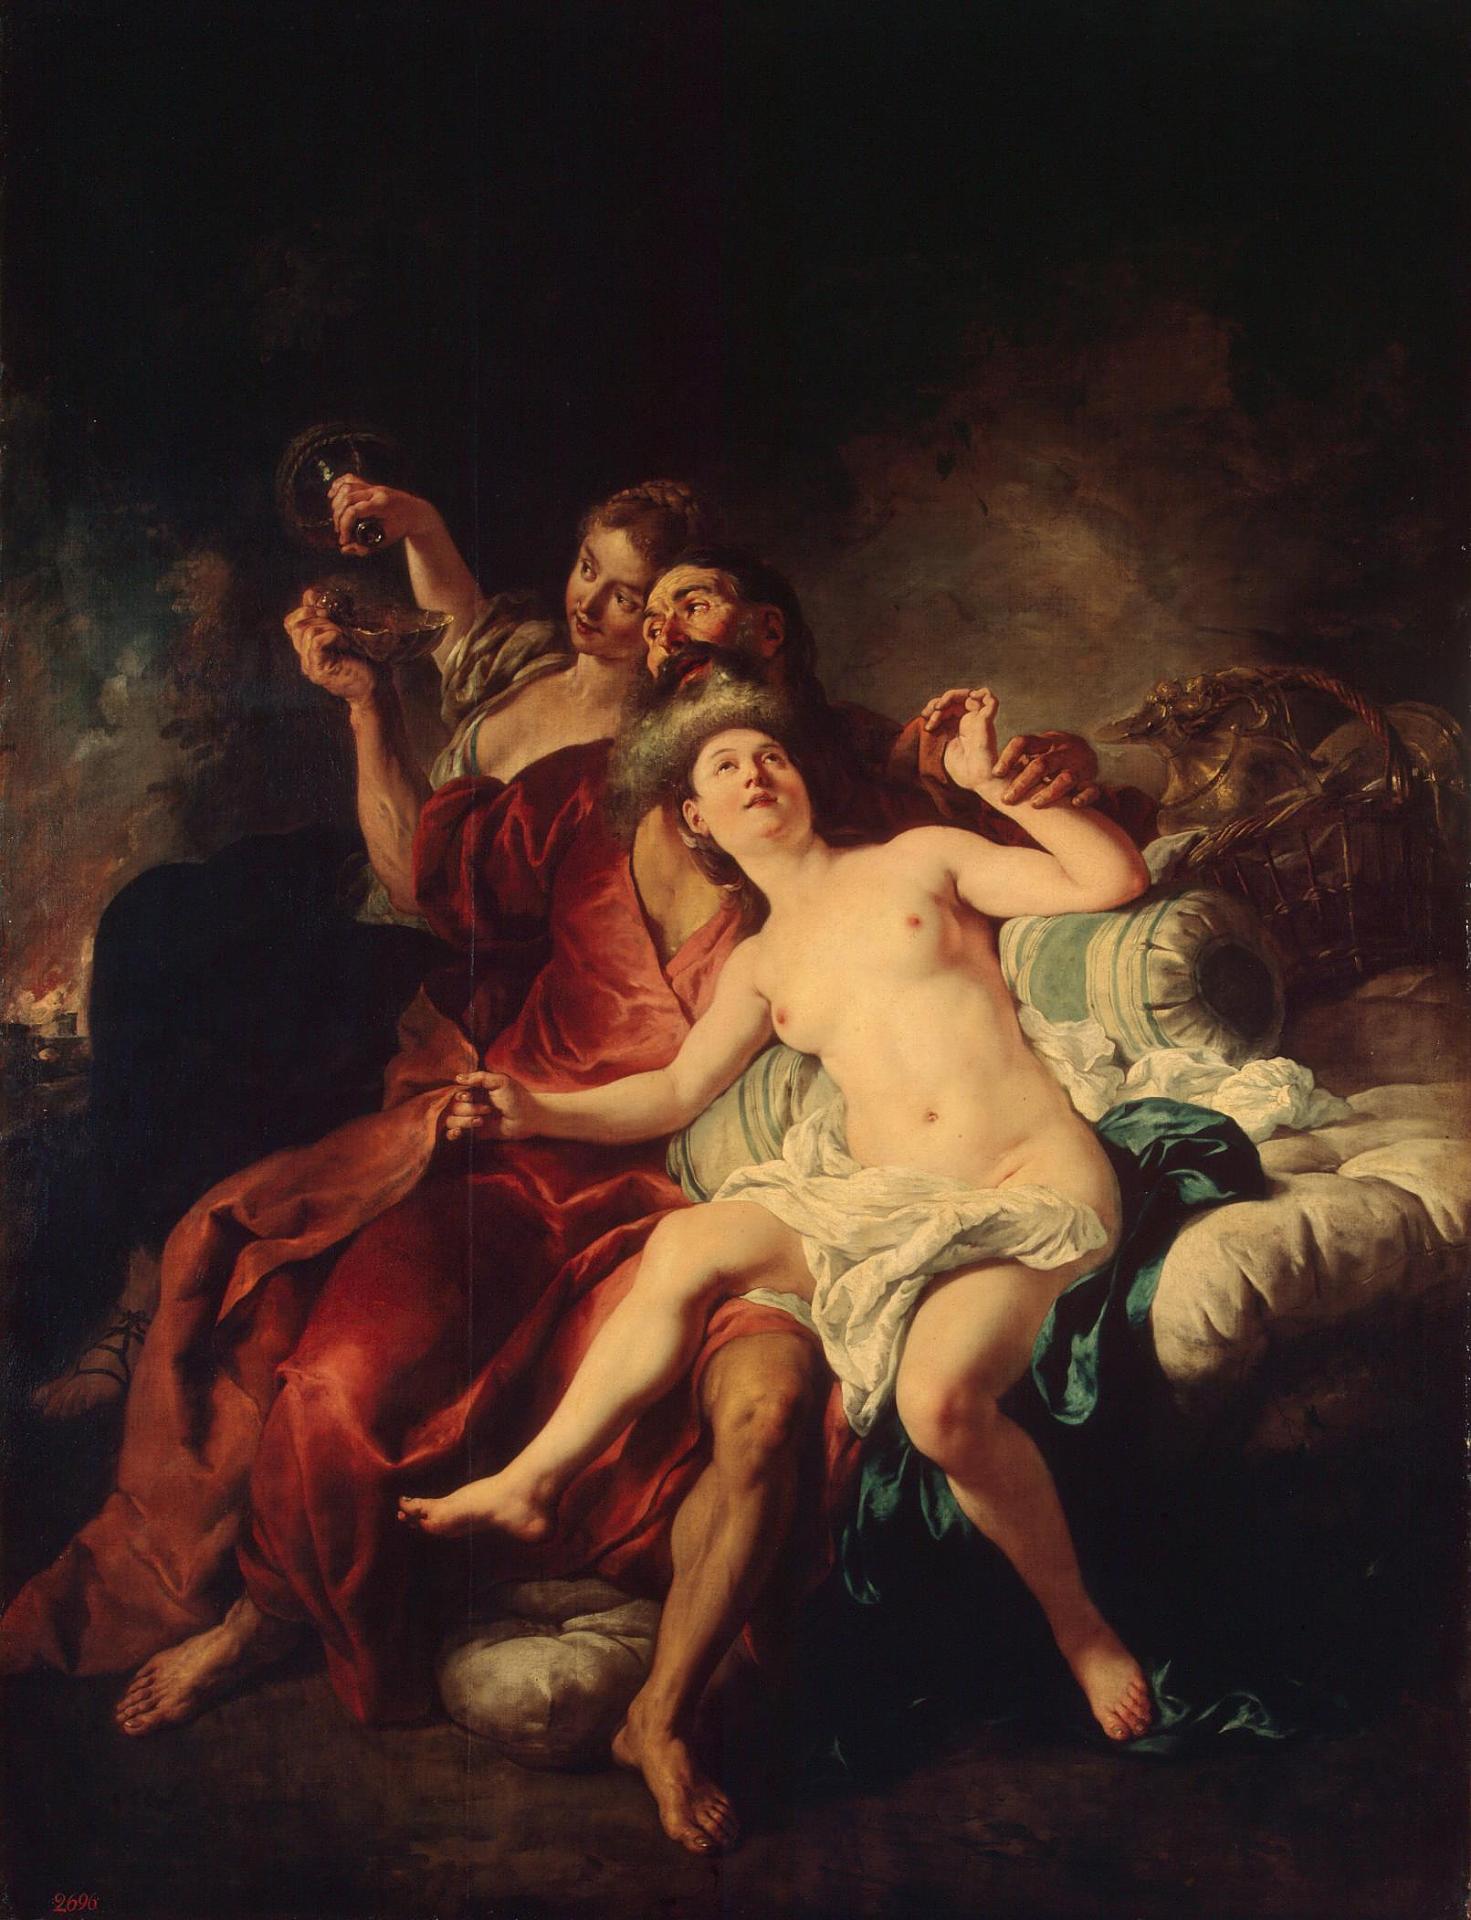 Жан Франсуа де Труа. "Лот с дочерьми". 1721. Эрмитаж, Санкт-Петербург.